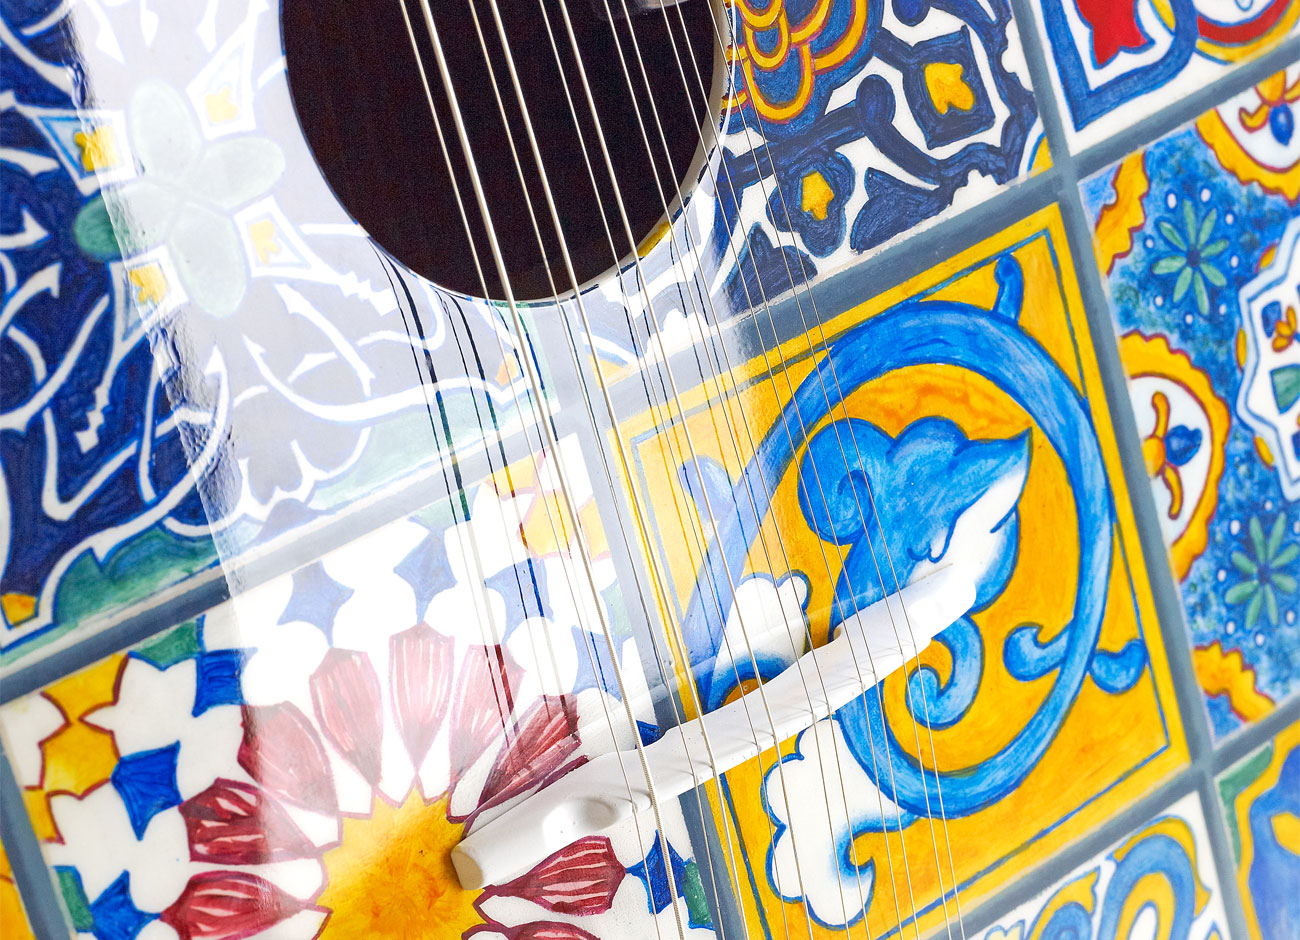 Azulejo i guitar